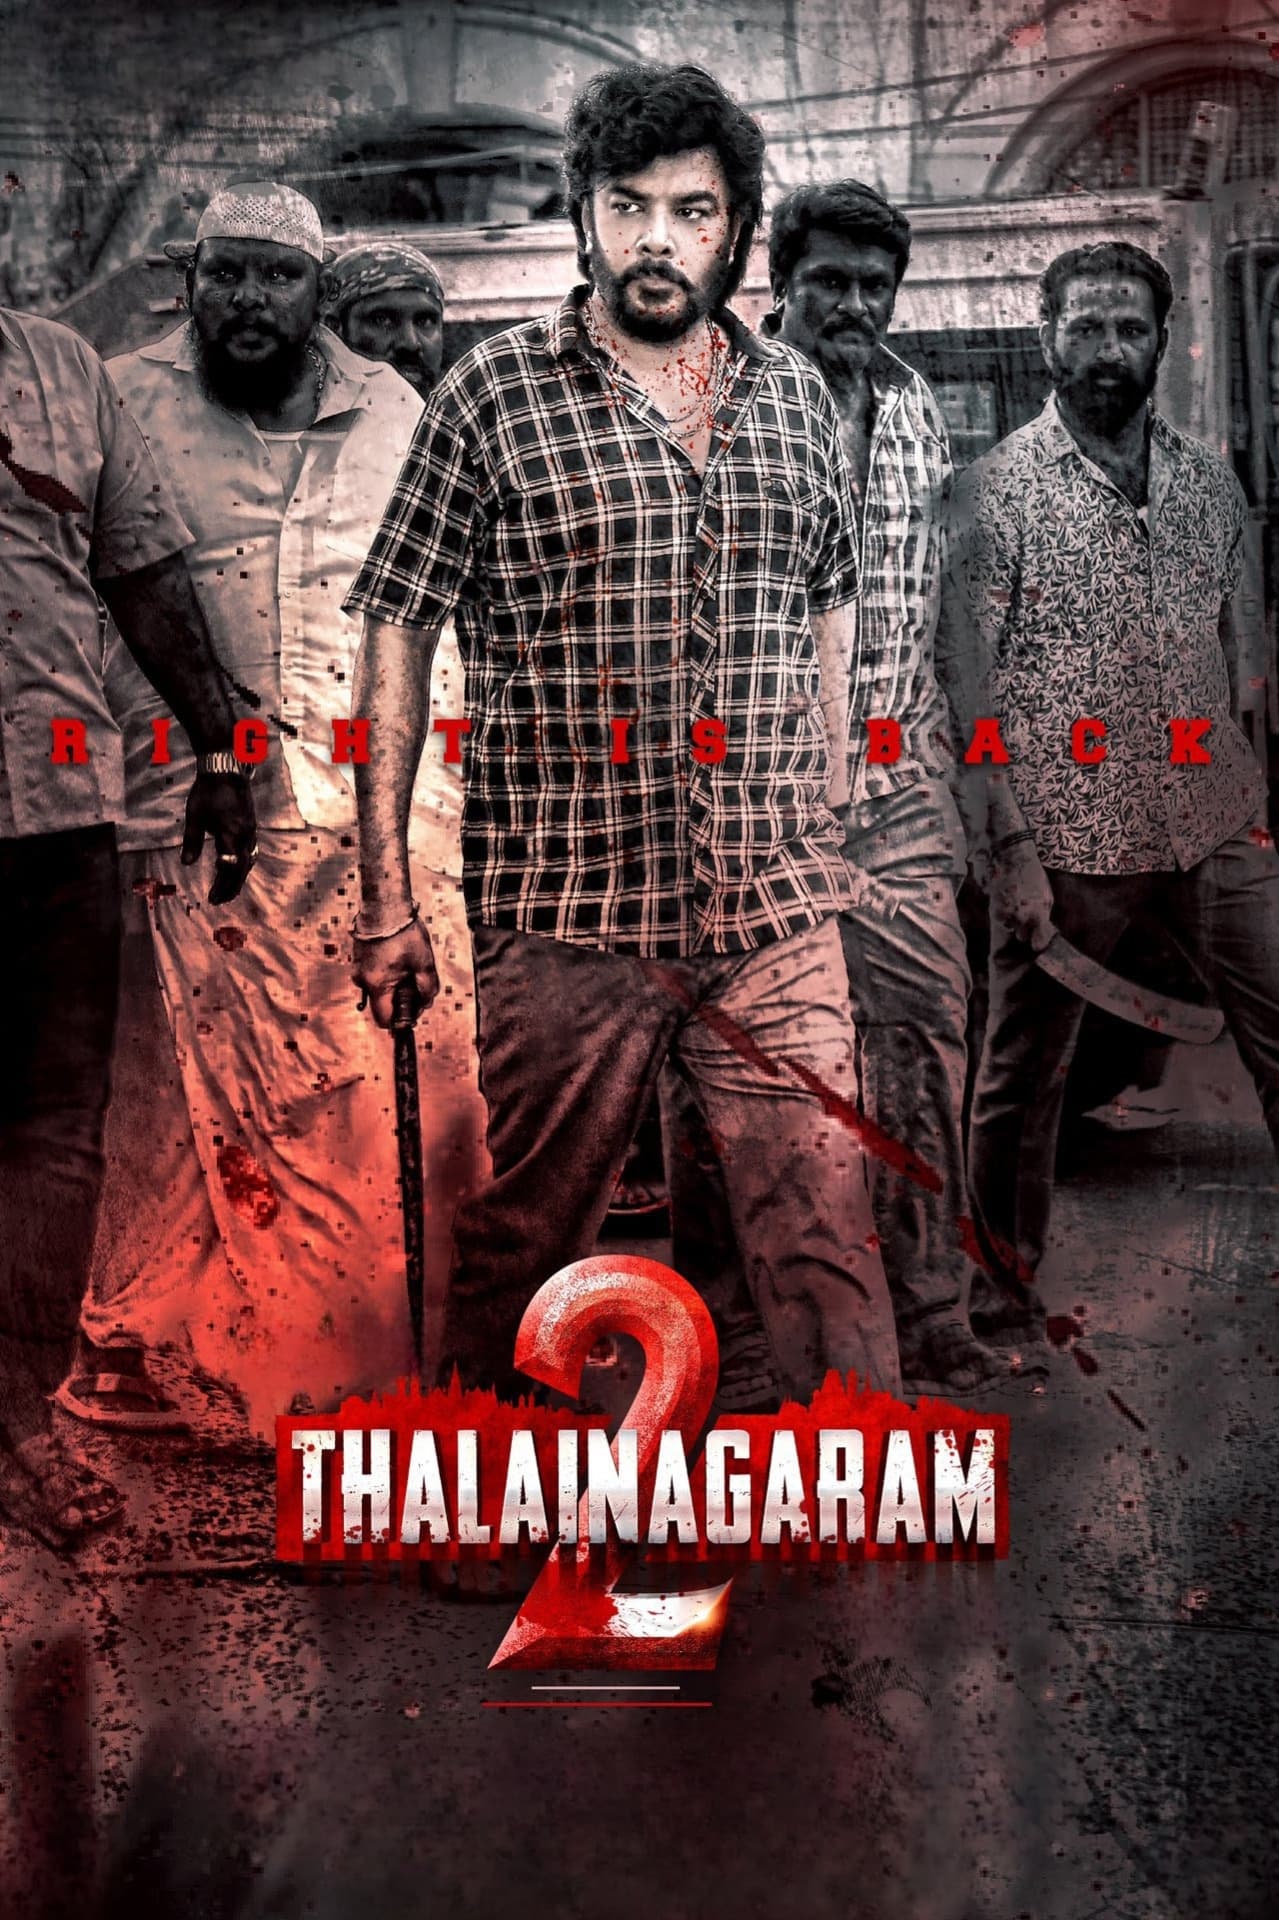 Poster for the movie "Thalainagaram 2"